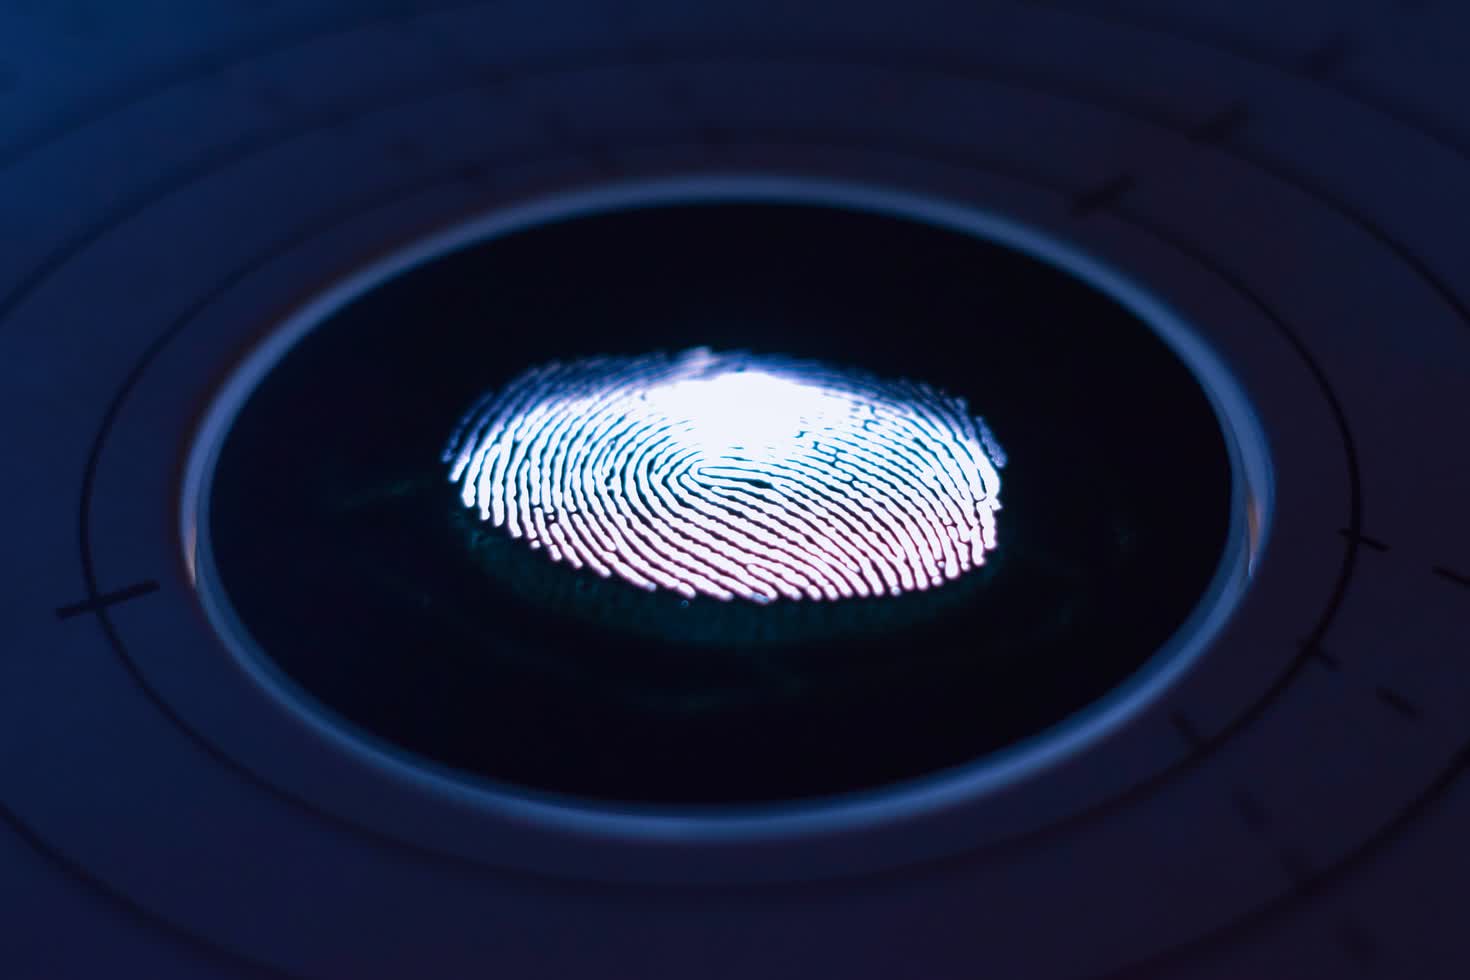 Hacking fingerprints is affordable and simple, says Kraken Security